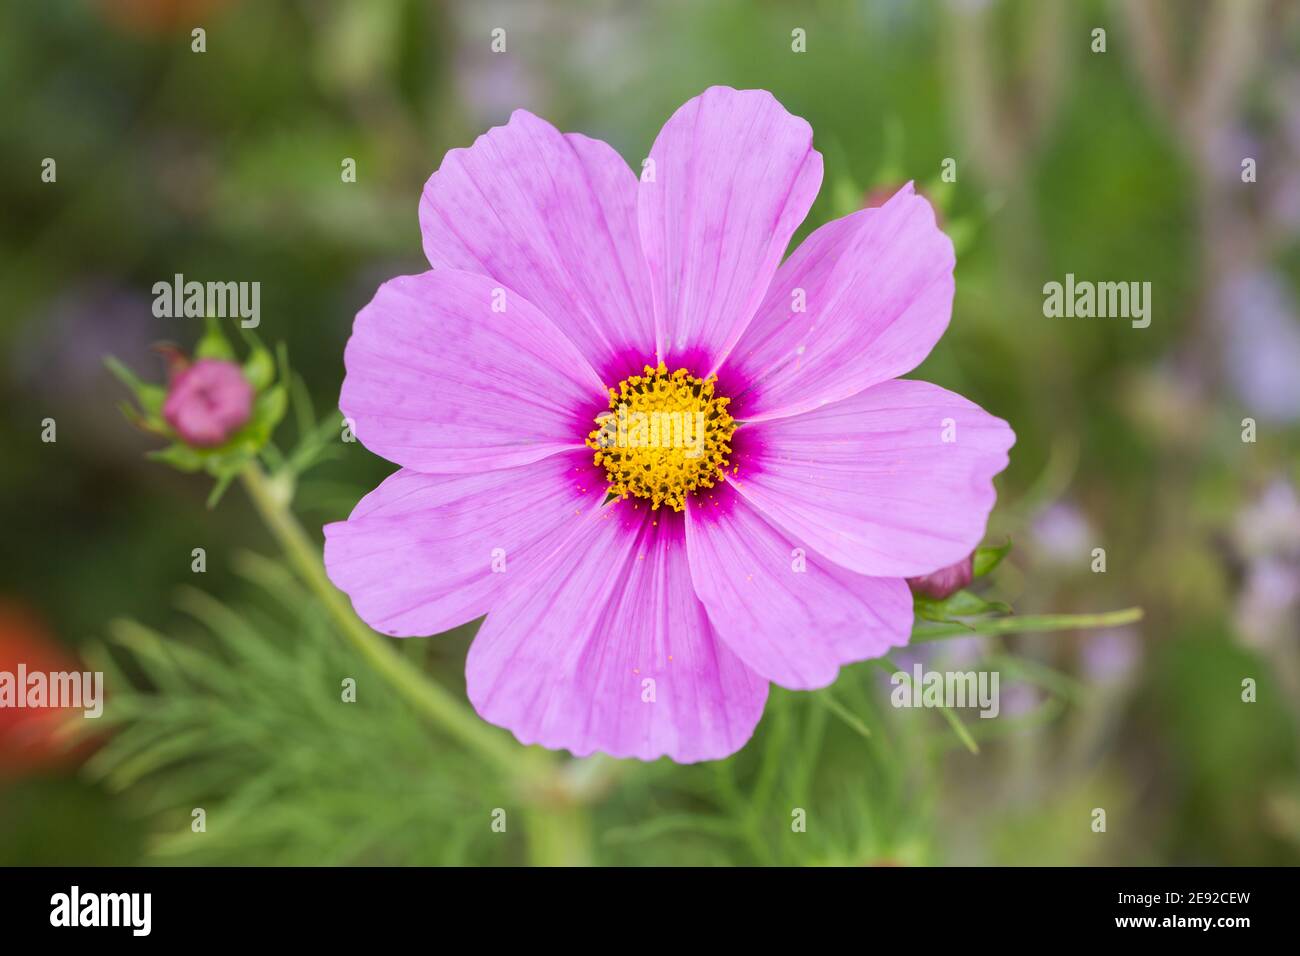 Close-up of a pink garden cosmos flower (latin name: Cosmos bipinnatus). Top down view. Stock Photo